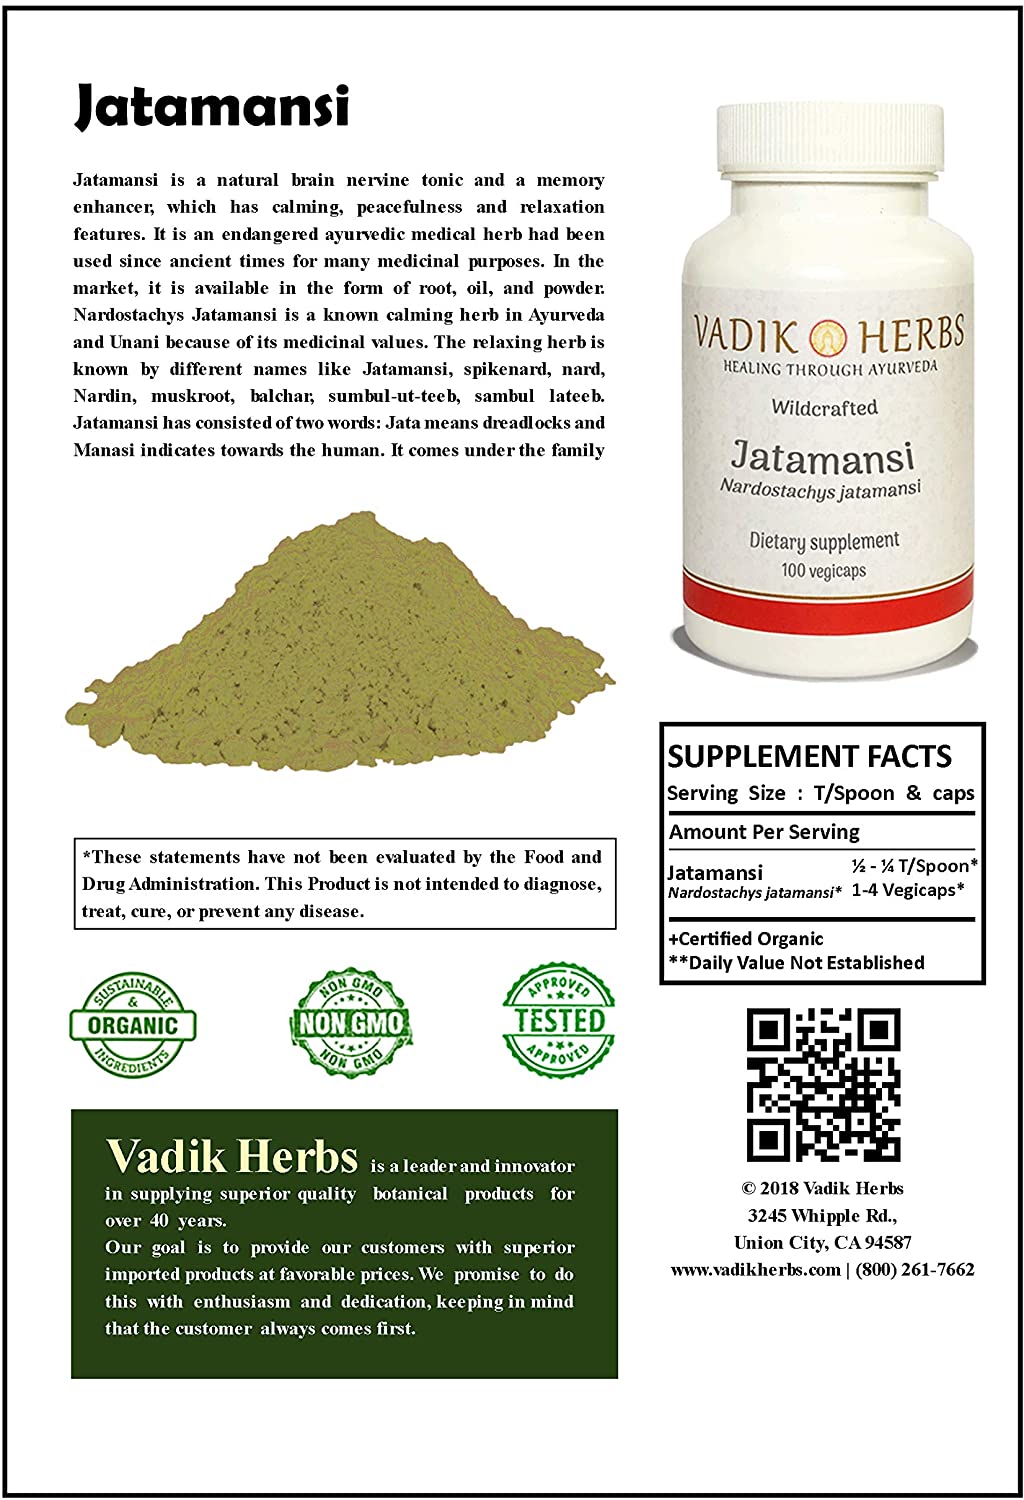 vadik herbs | jatamansi capsules | 100 pieces | nardostachys jatamansi